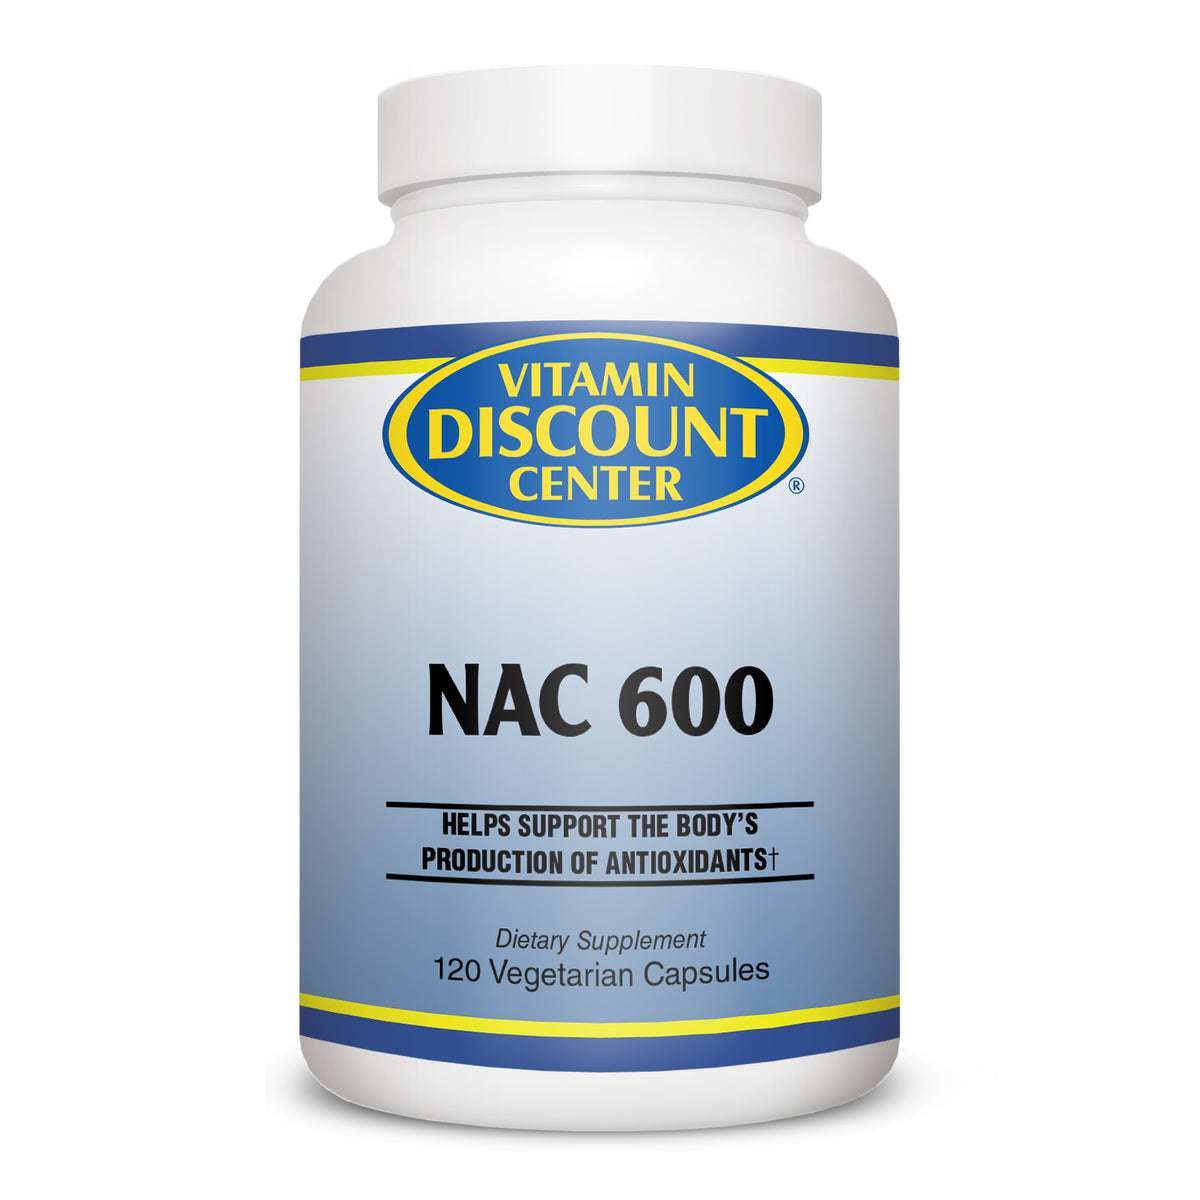 NAC 600 by Vitamin Discount Center